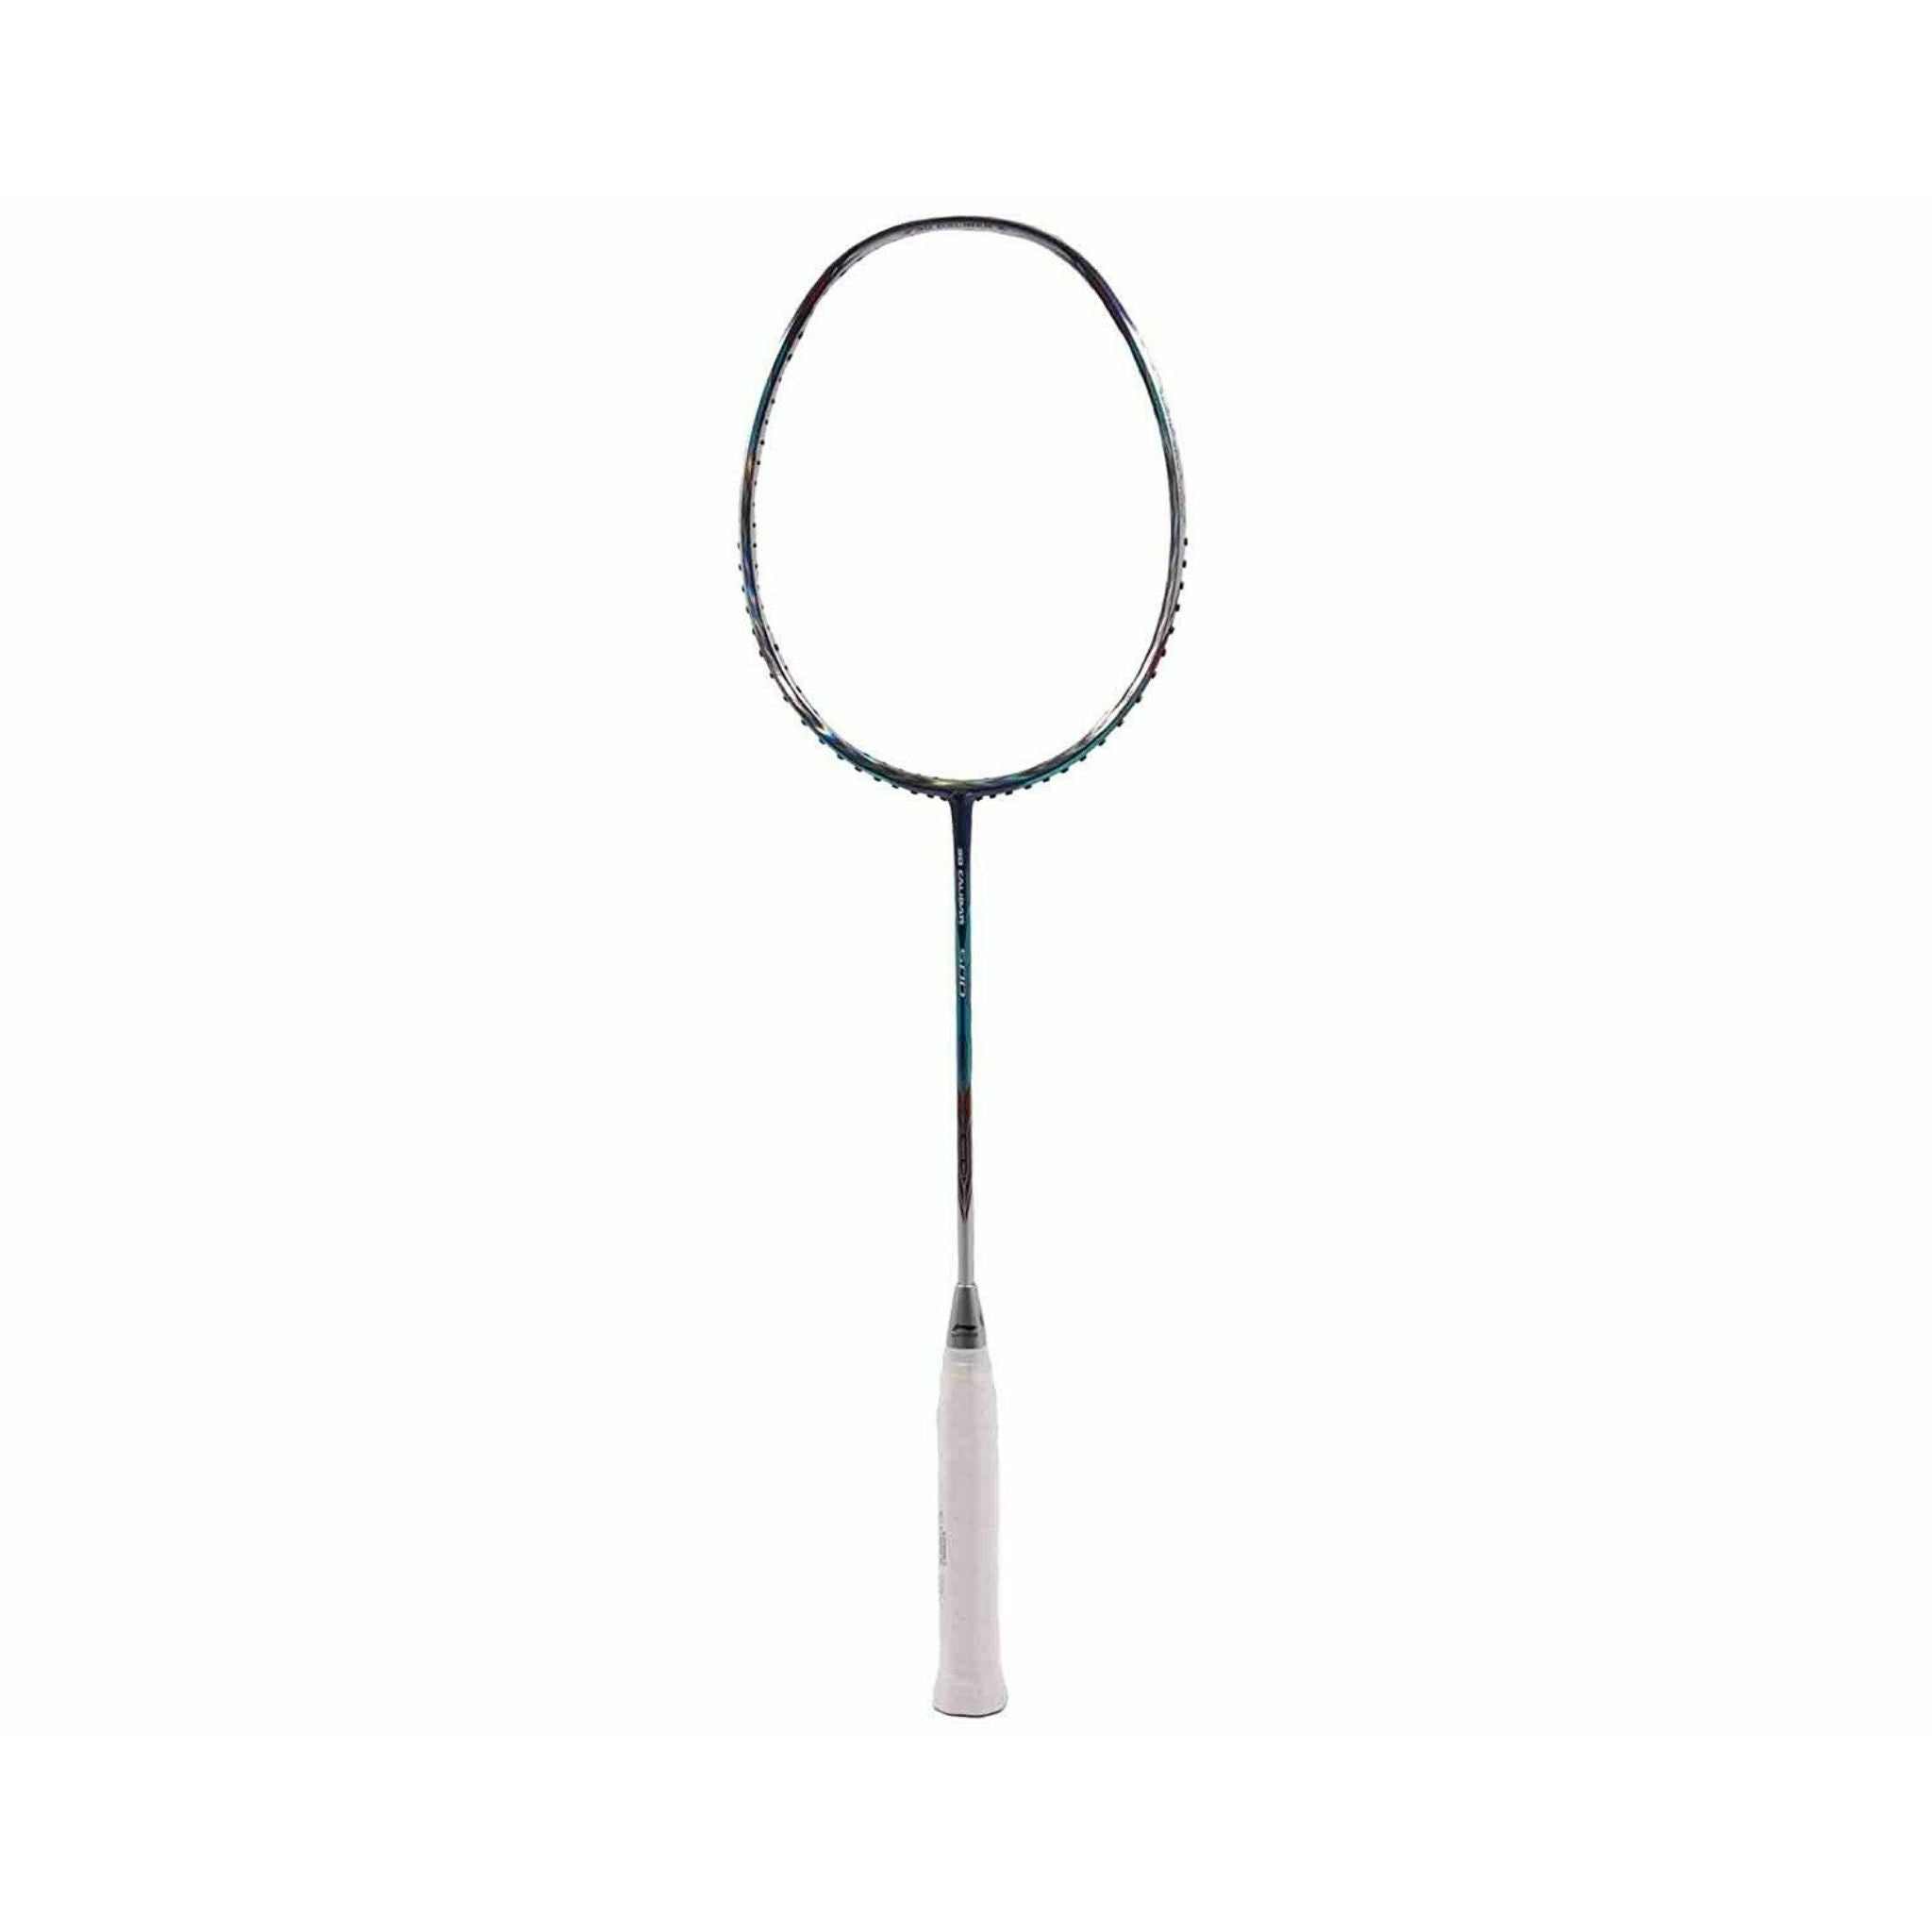 LI-NING 3D Calibar 500 Badminton Racket